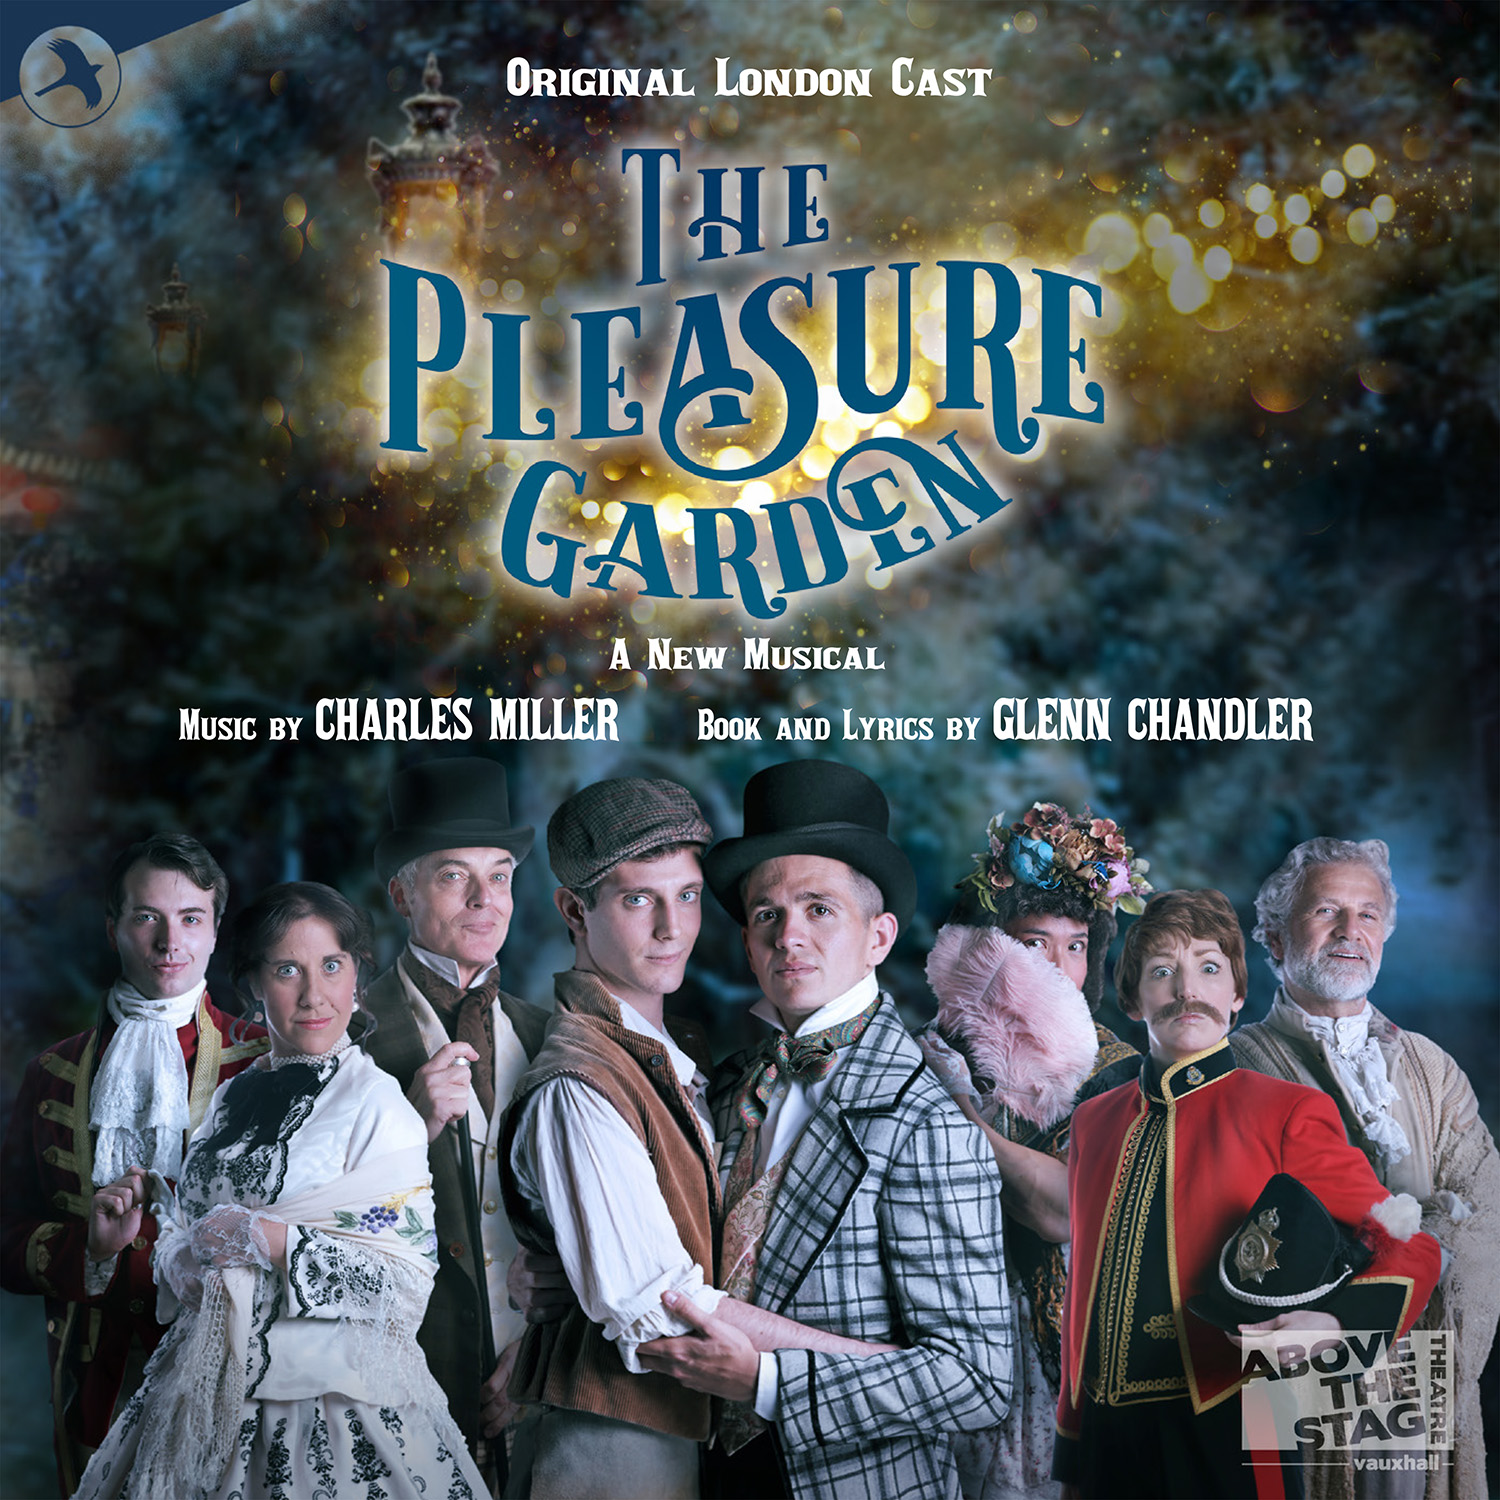 The cast album of "The Pleasure Garden". (Photo: JAY Records)